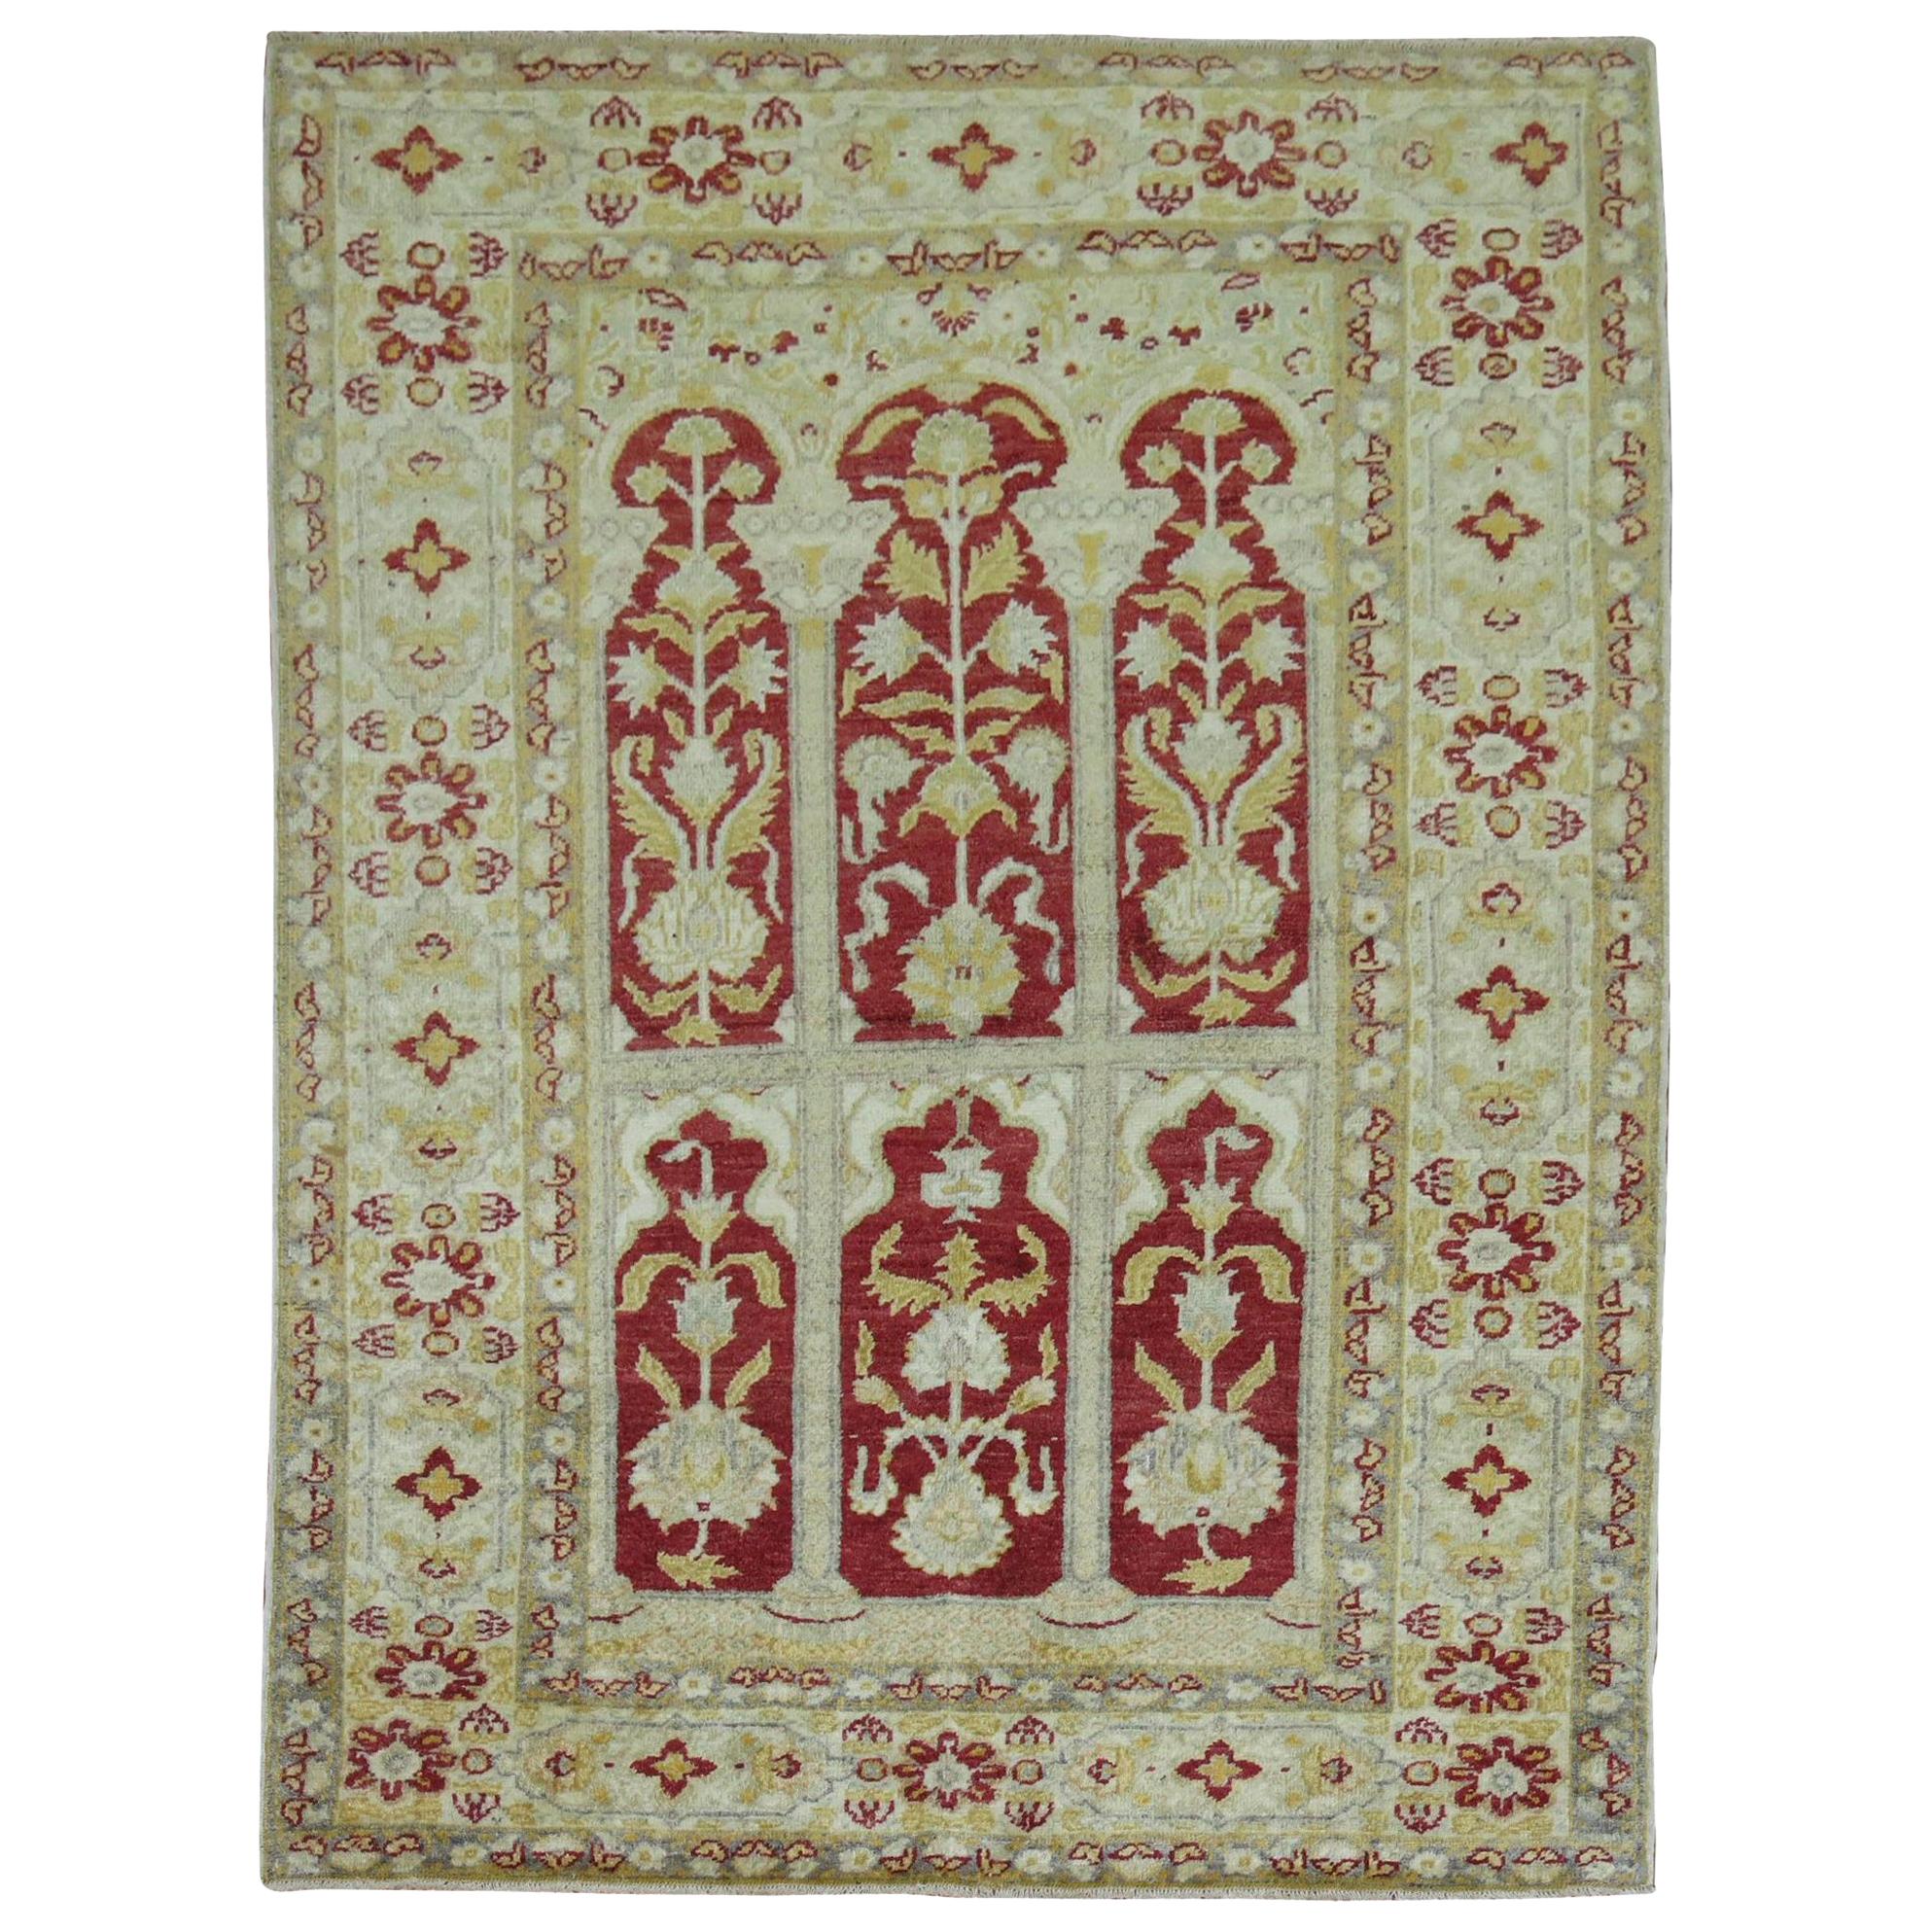 Cherry Red Antique Turkish Sivas Prayer Carpet, Early 20th Century For Sale